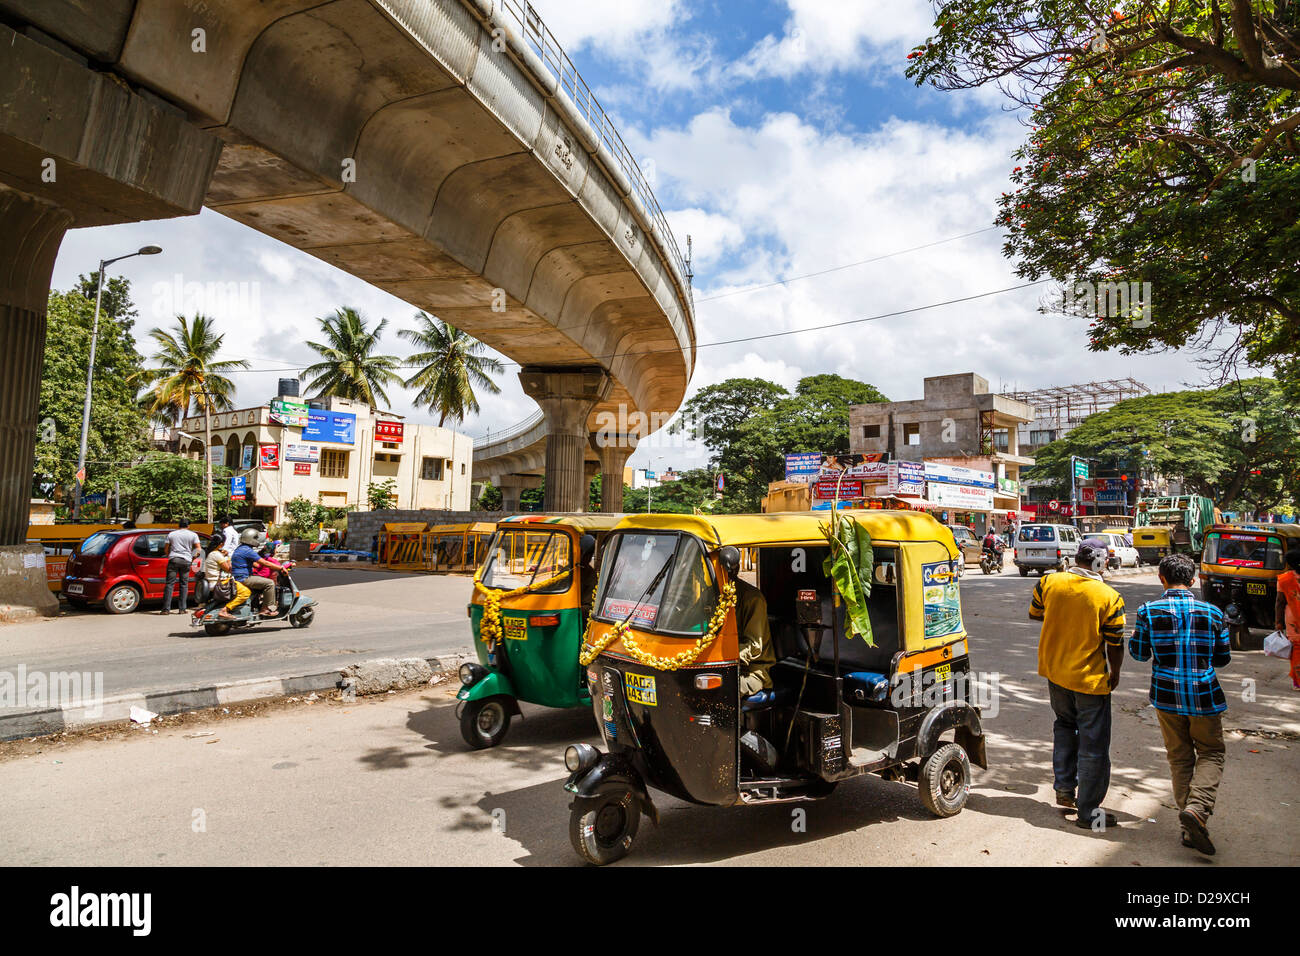 Auto rickshaws and traffic pass underneath the newly built Bangalore metro overpass, Bangalore, India Stock Photo